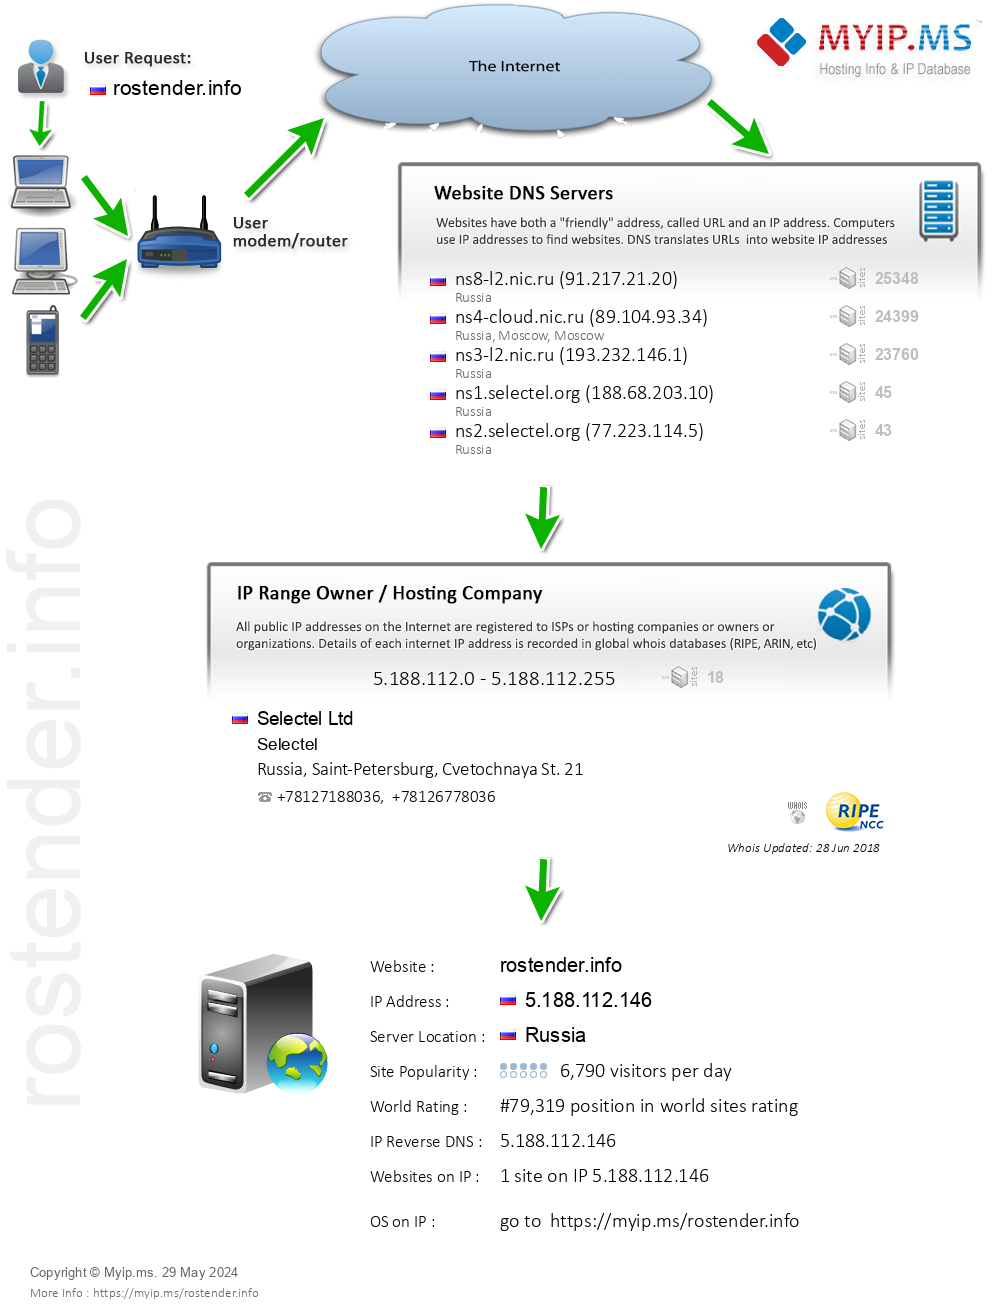 Rostender.info - Website Hosting Visual IP Diagram